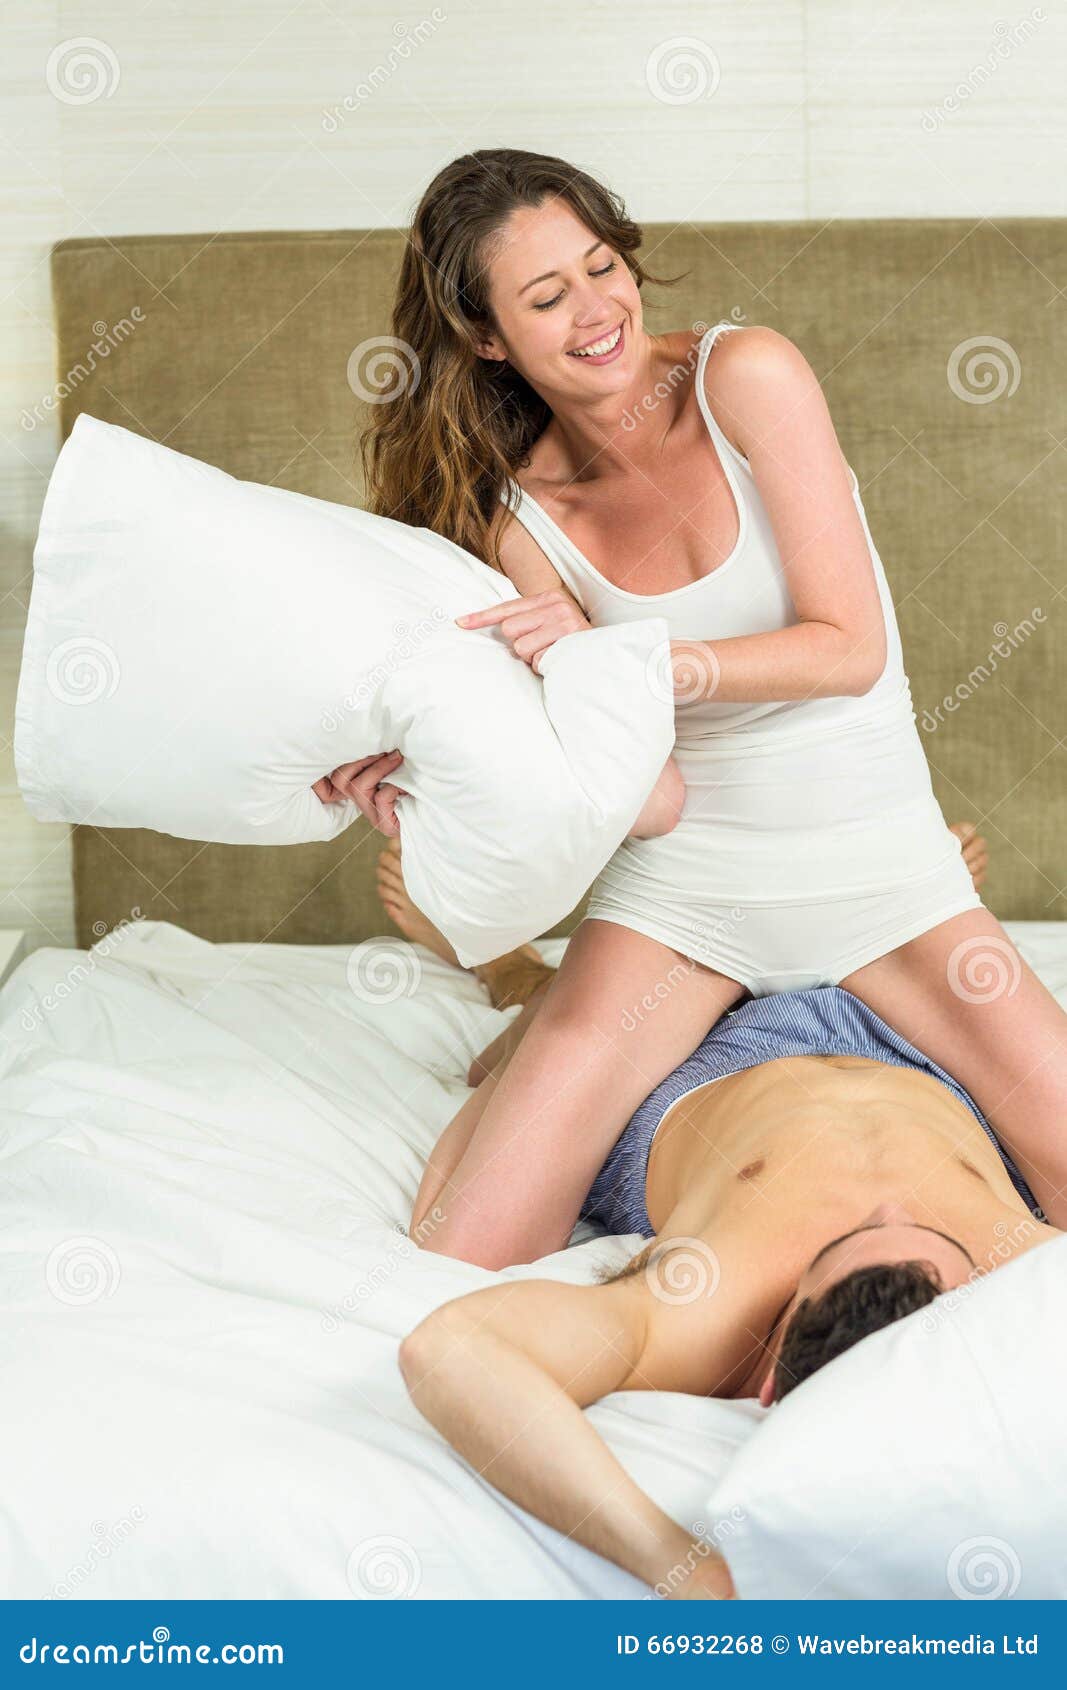 К чему снится драться во сне женщине. Бой подушками на кровати. Бои подушками в спальне. Драка подушками на кровати. Женщины дерутся на кровати.